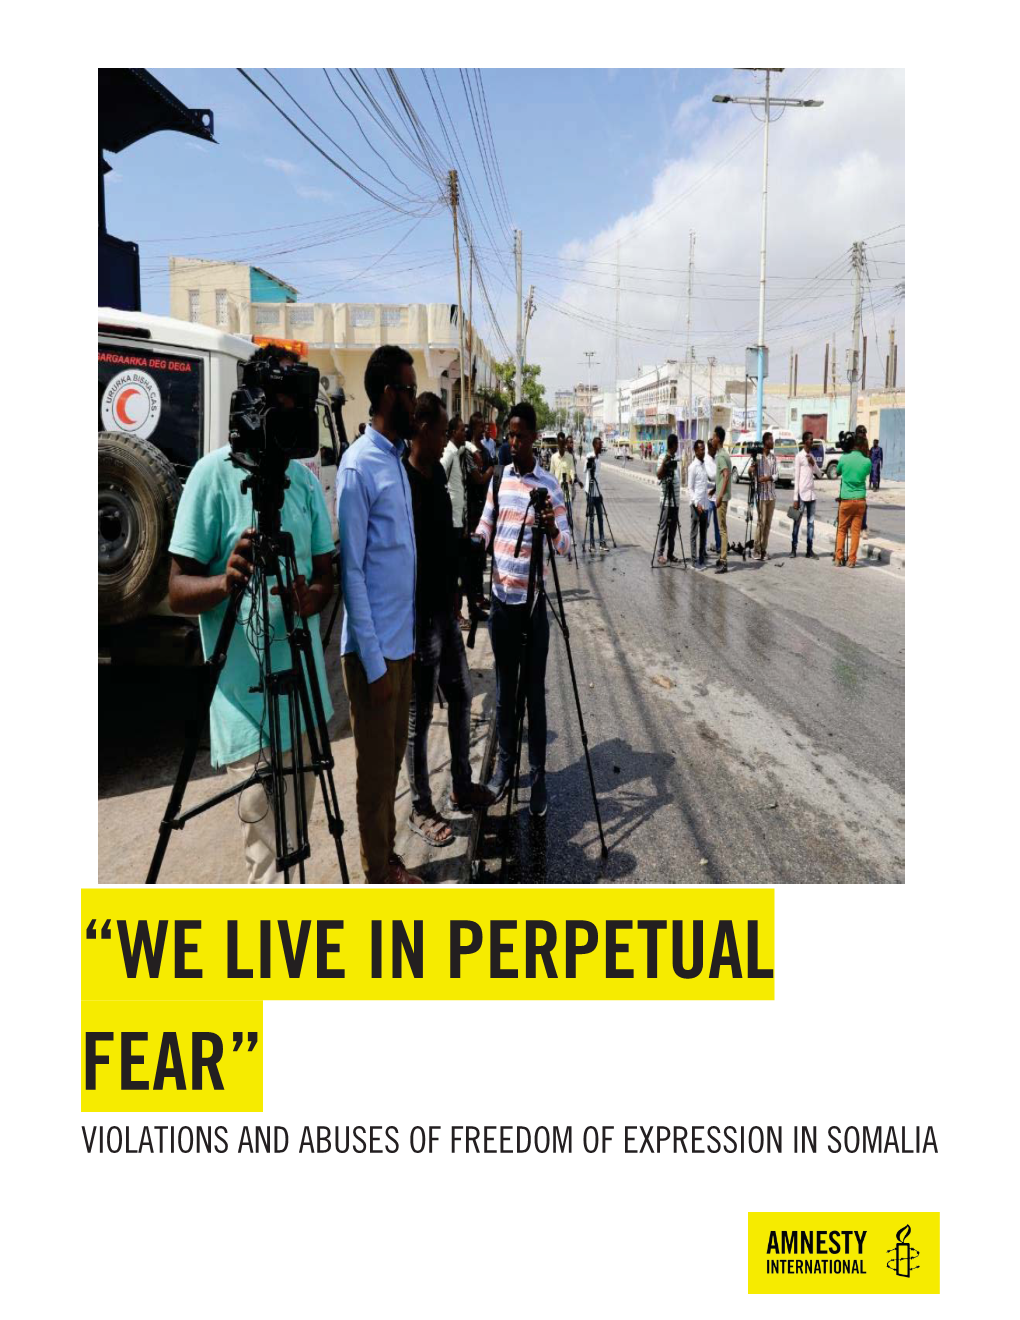 Somalia: "We Live in Perpetual Fear"